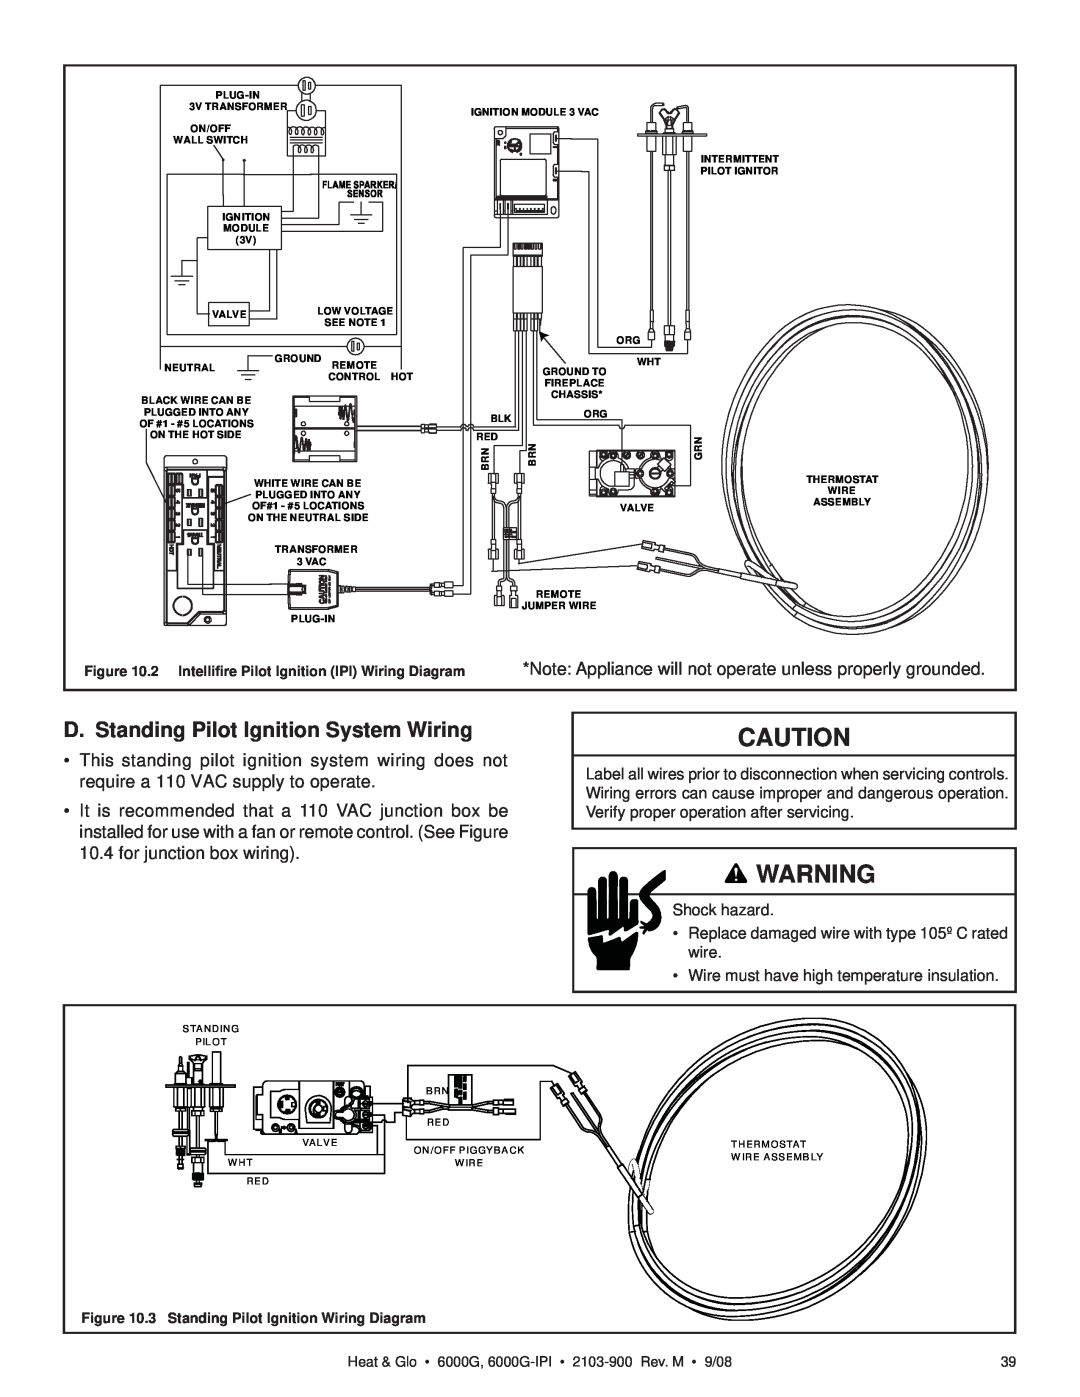 Heat & Glo LifeStyle 6000G-LP, 6000G-IPILP owner manual D. Standing Pilot Ignition System Wiring, Shock hazard 